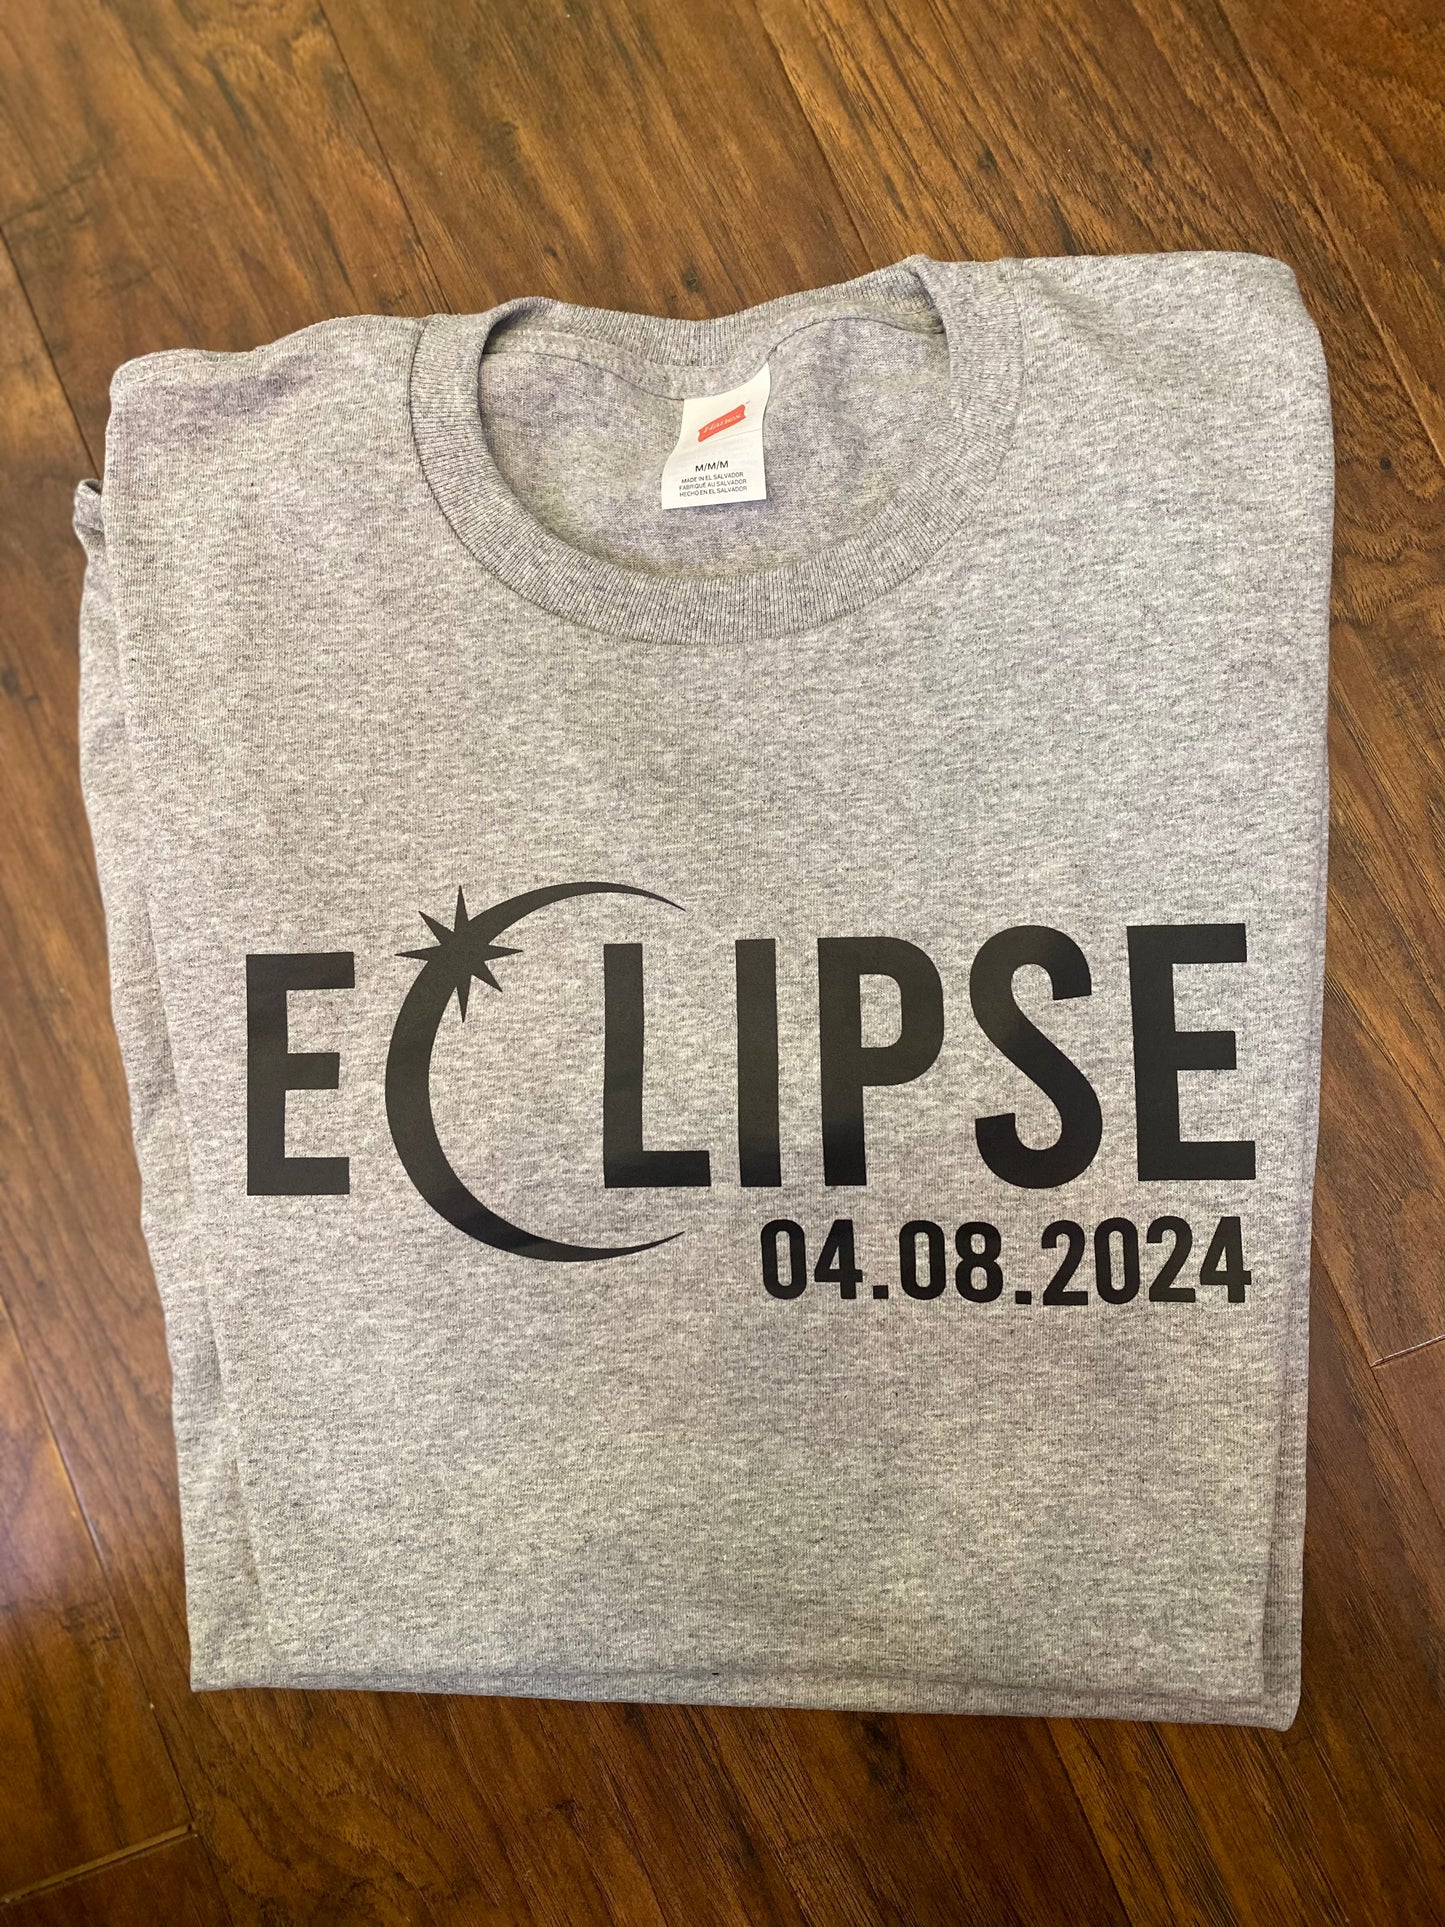 Eclipse 04.08.2024 | Short Sleeve T-Shirt | Adult Unisex